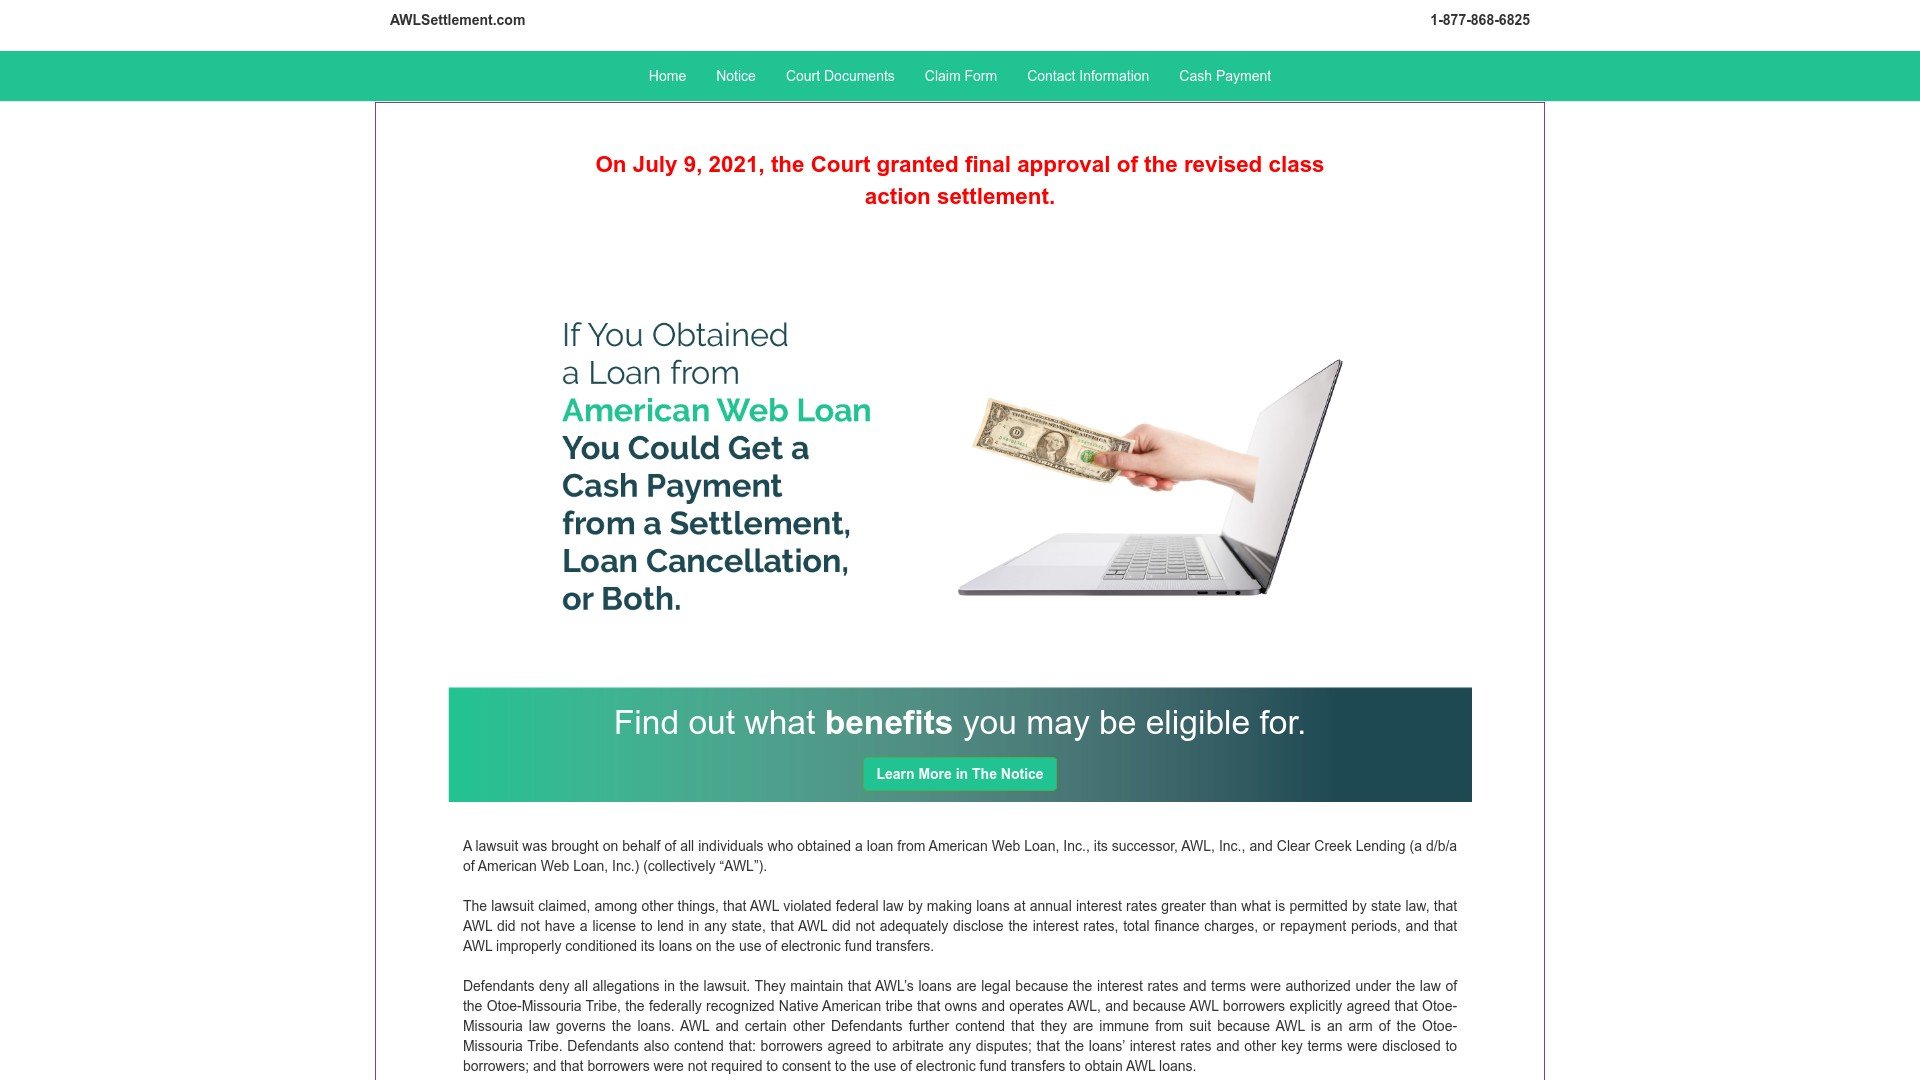 https://www.awlsettlement.com -  AWL Settlement - American Web Loan Class Action Lawsuit